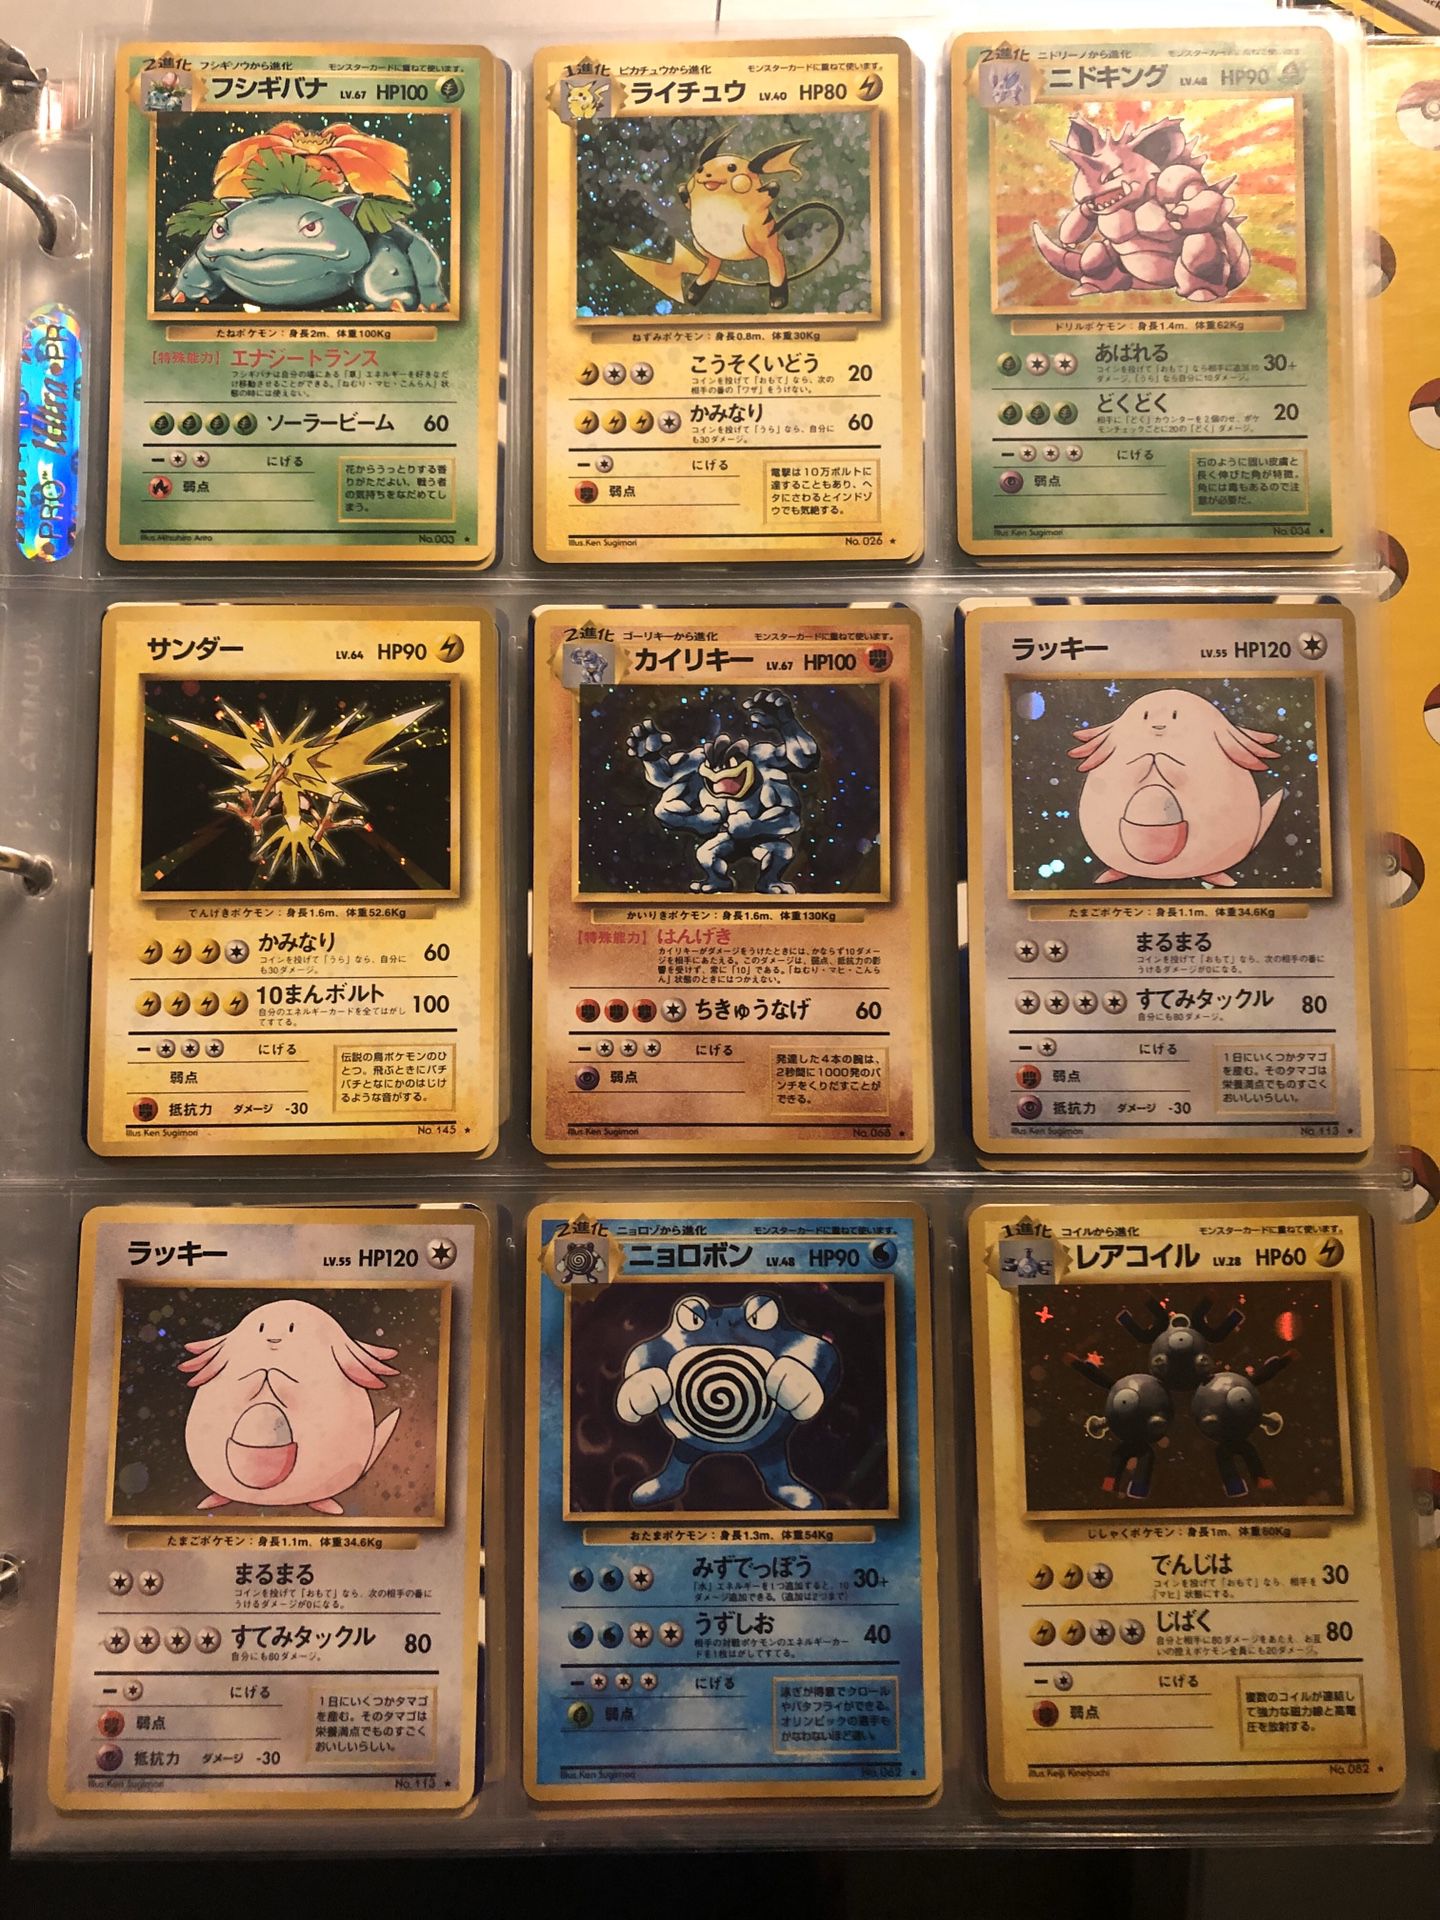 Japanese Pokémon cards